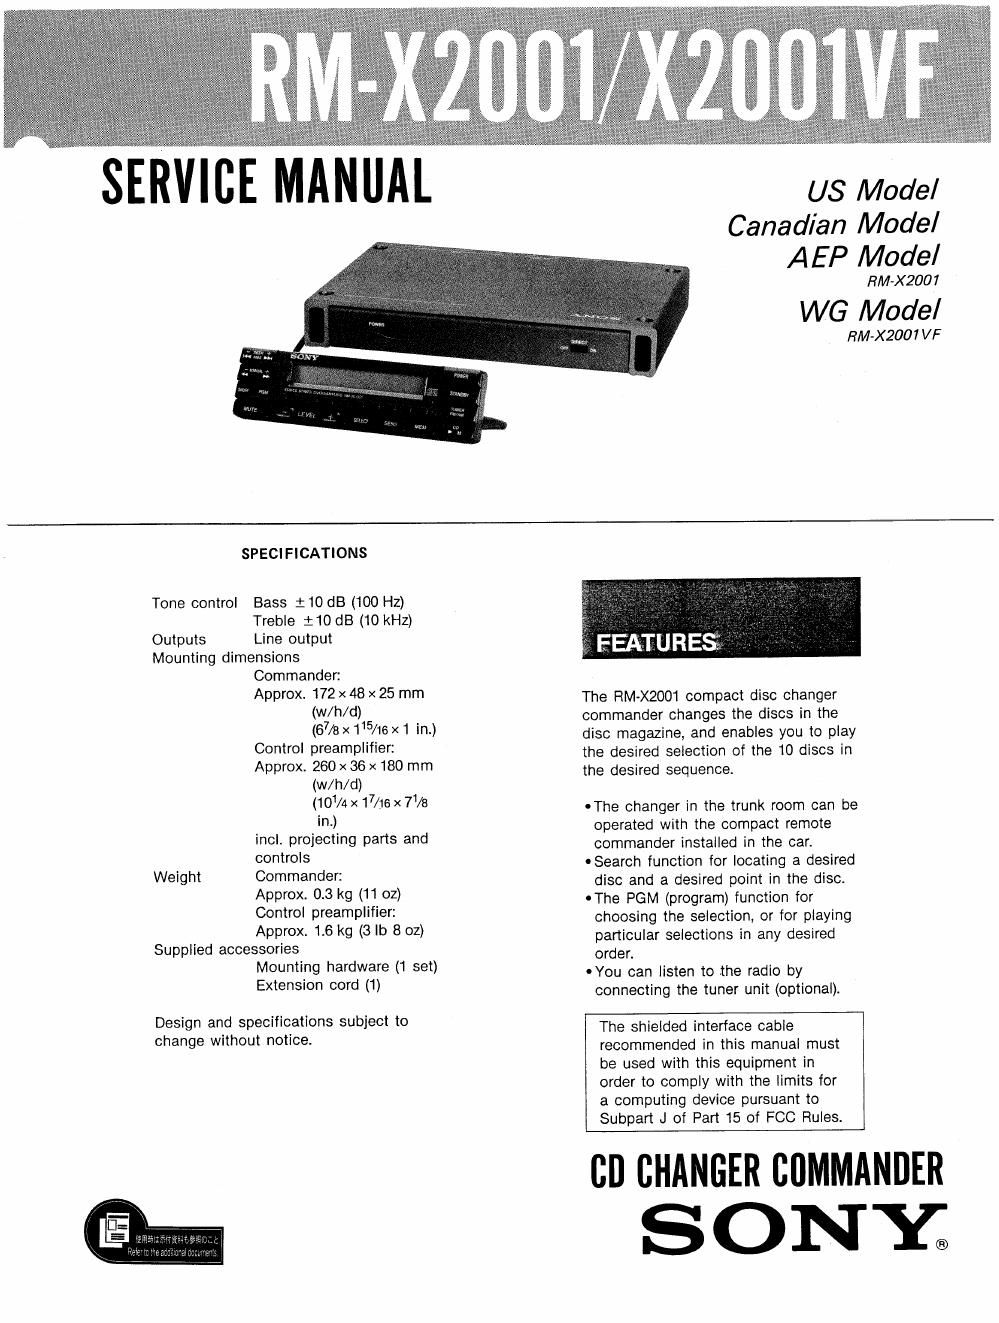 sony rm x 2001 service manual